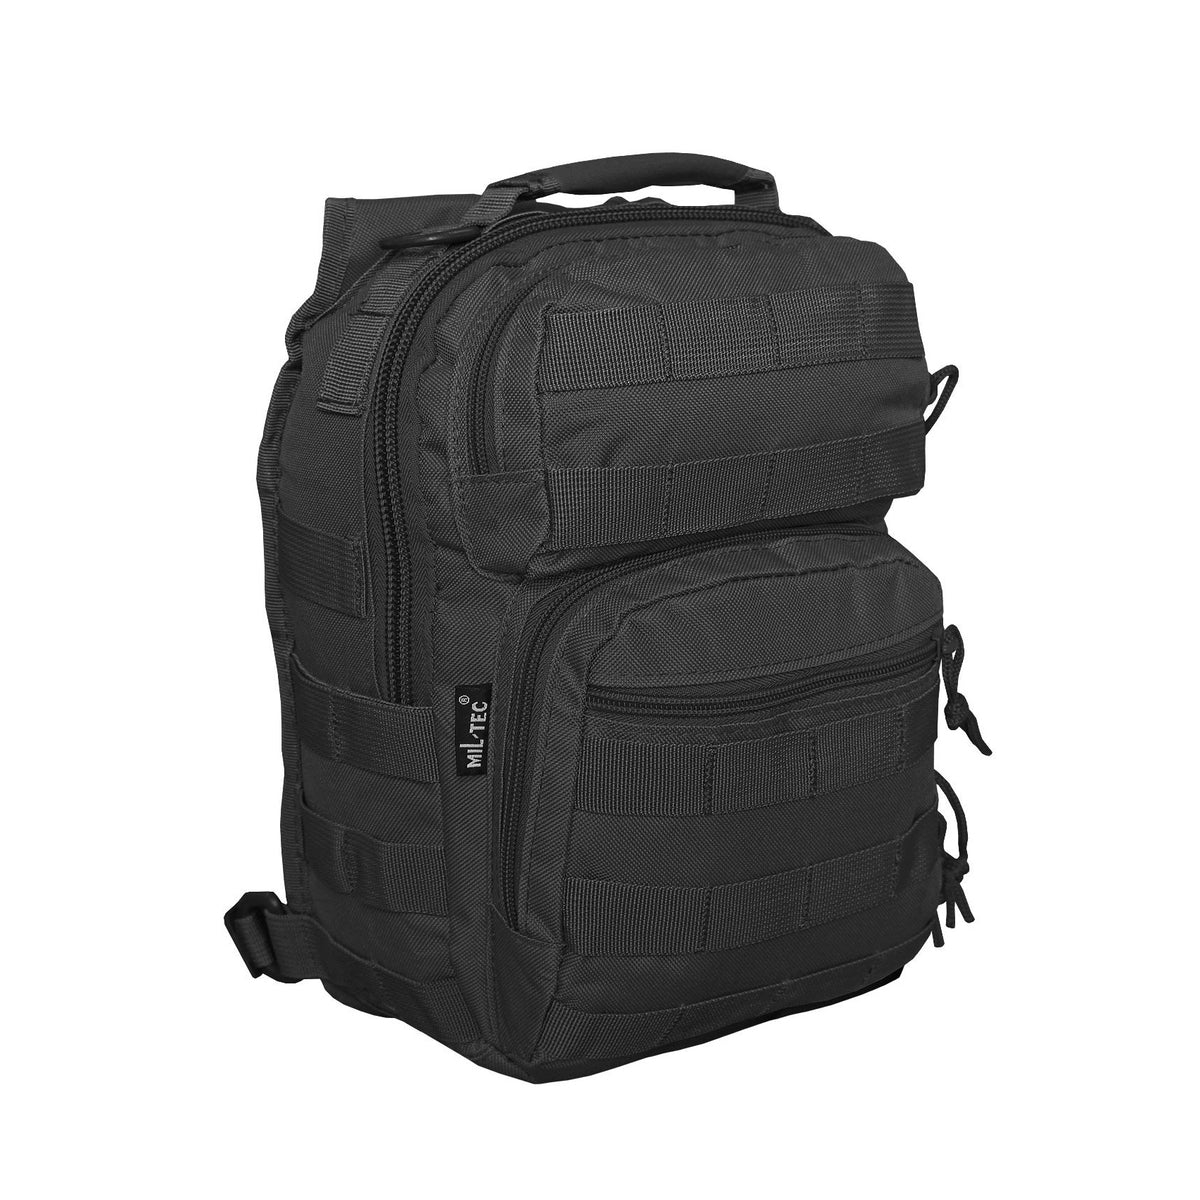 Mil-Tec Backpack One Strap Assault Pack SM tactical black